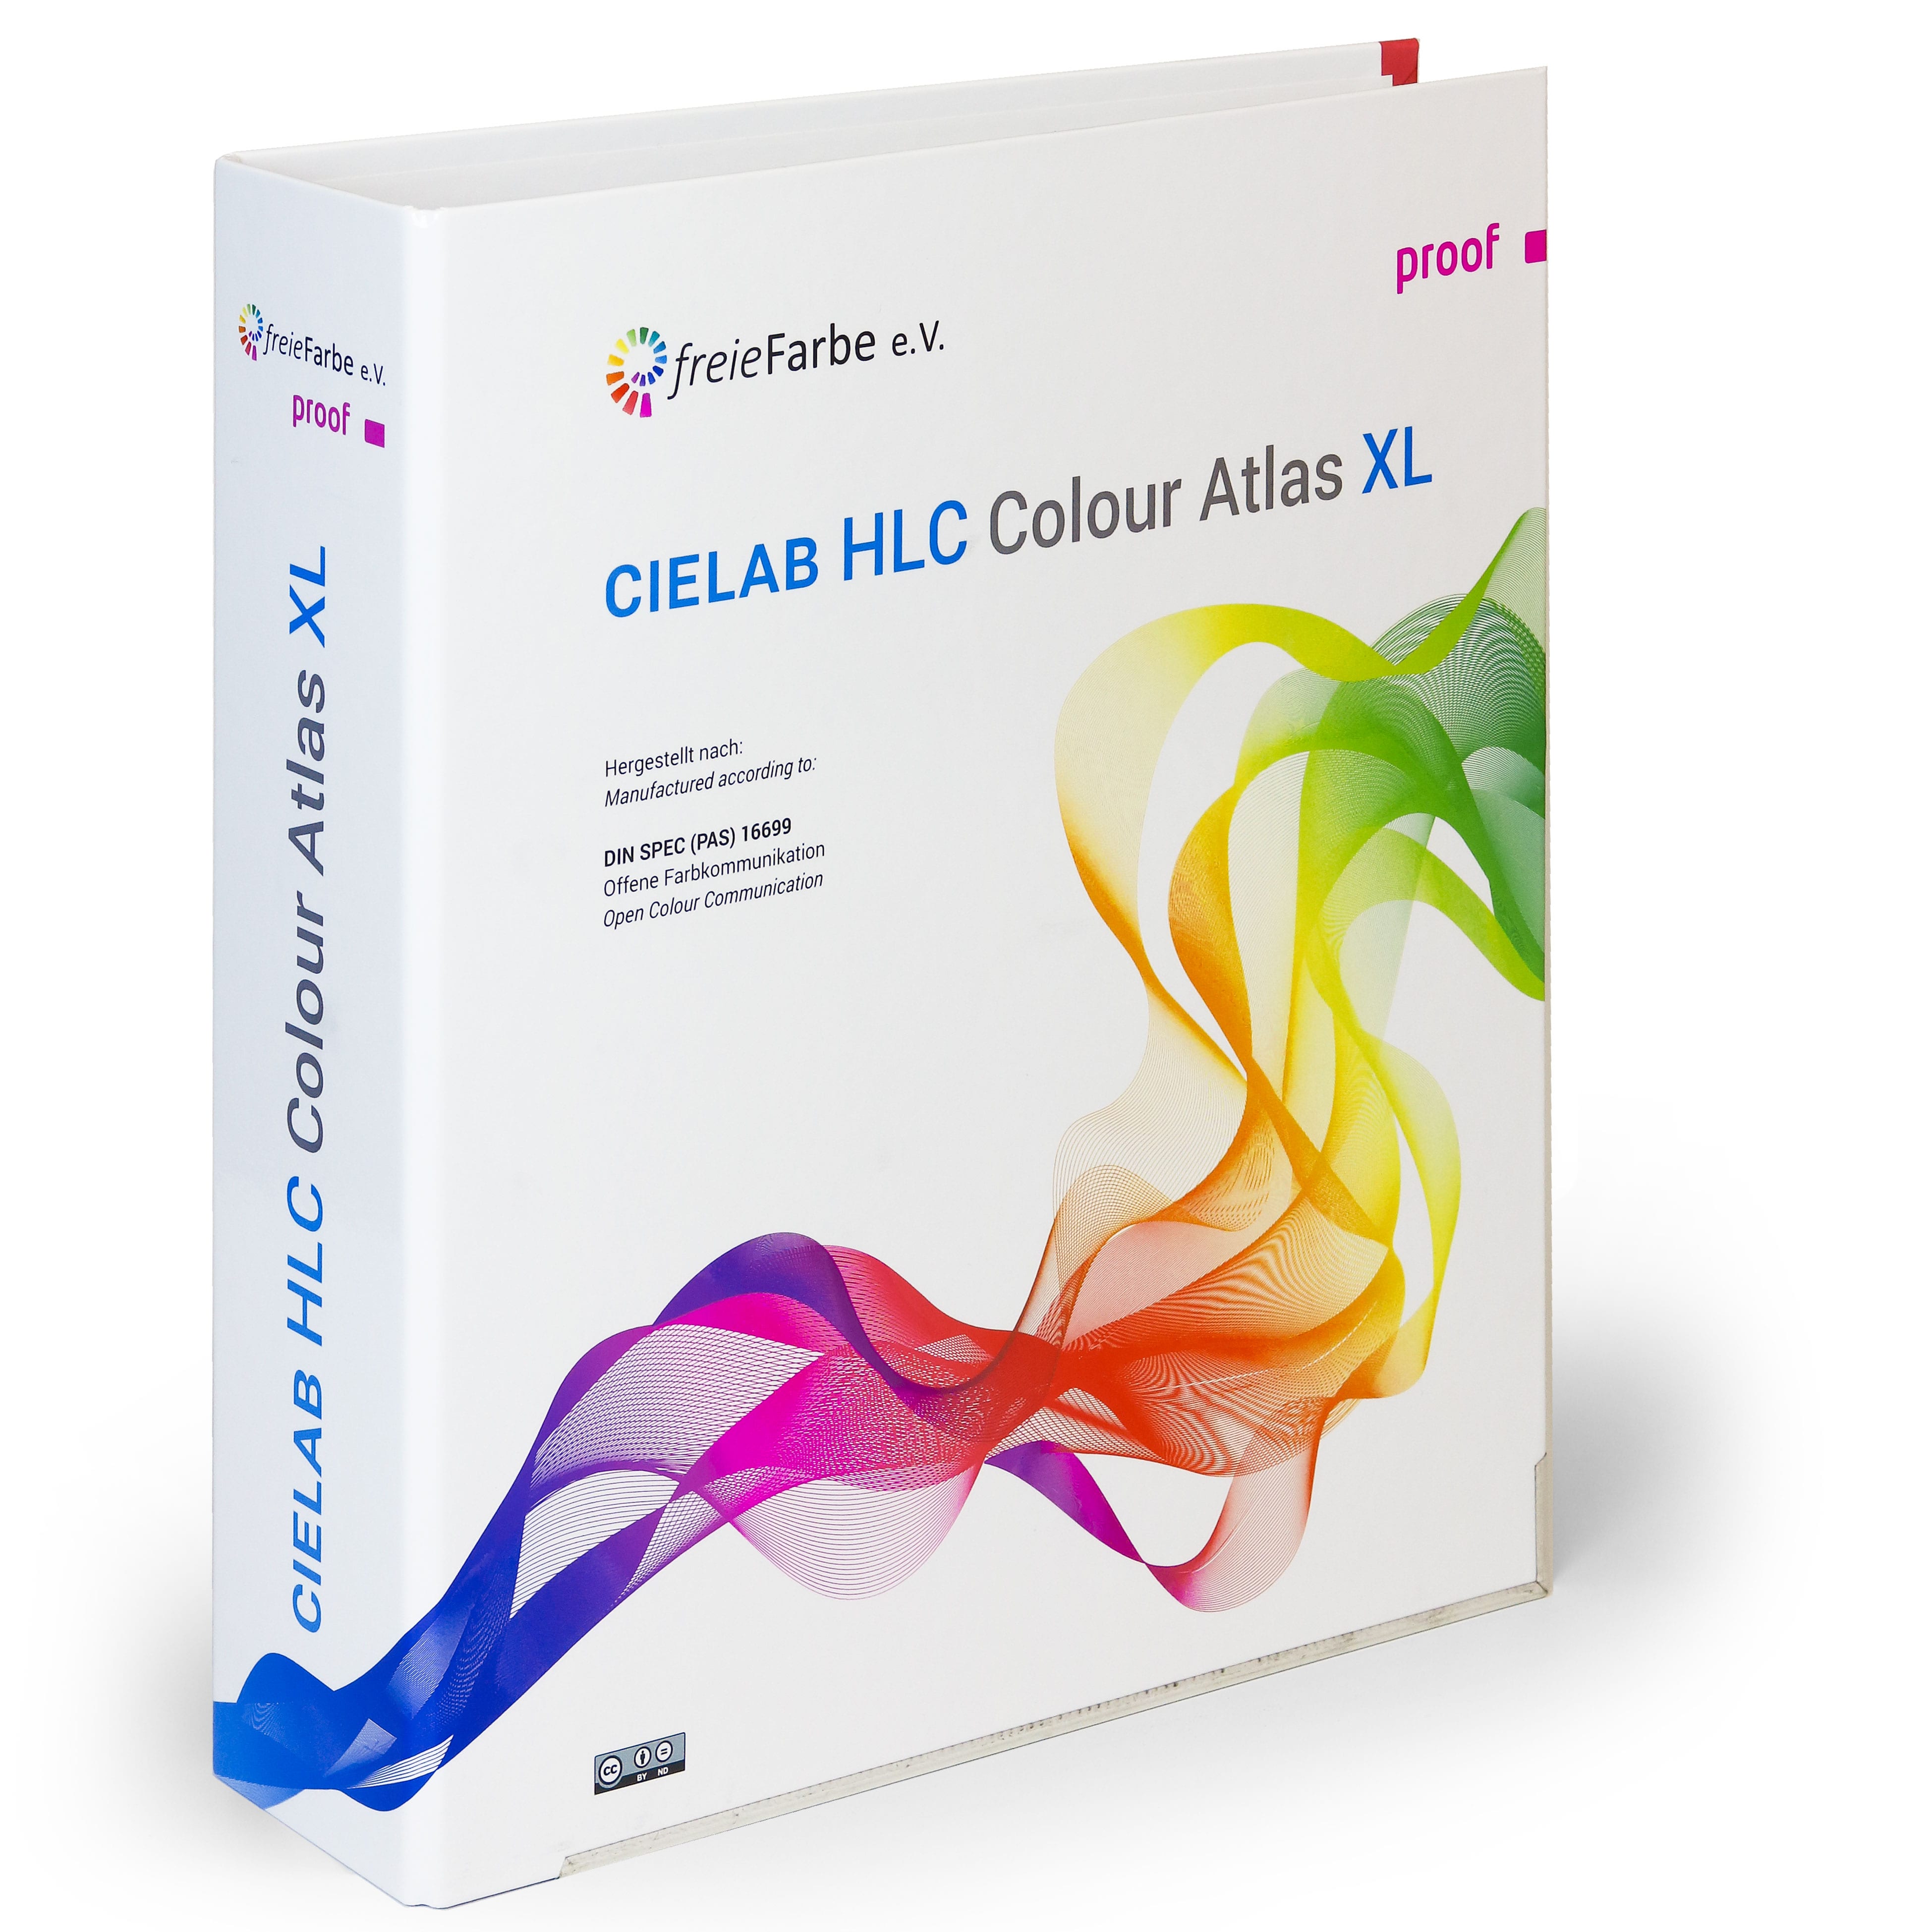 HLC Colour Atlas XL od freieFarbe a Proof GmbH